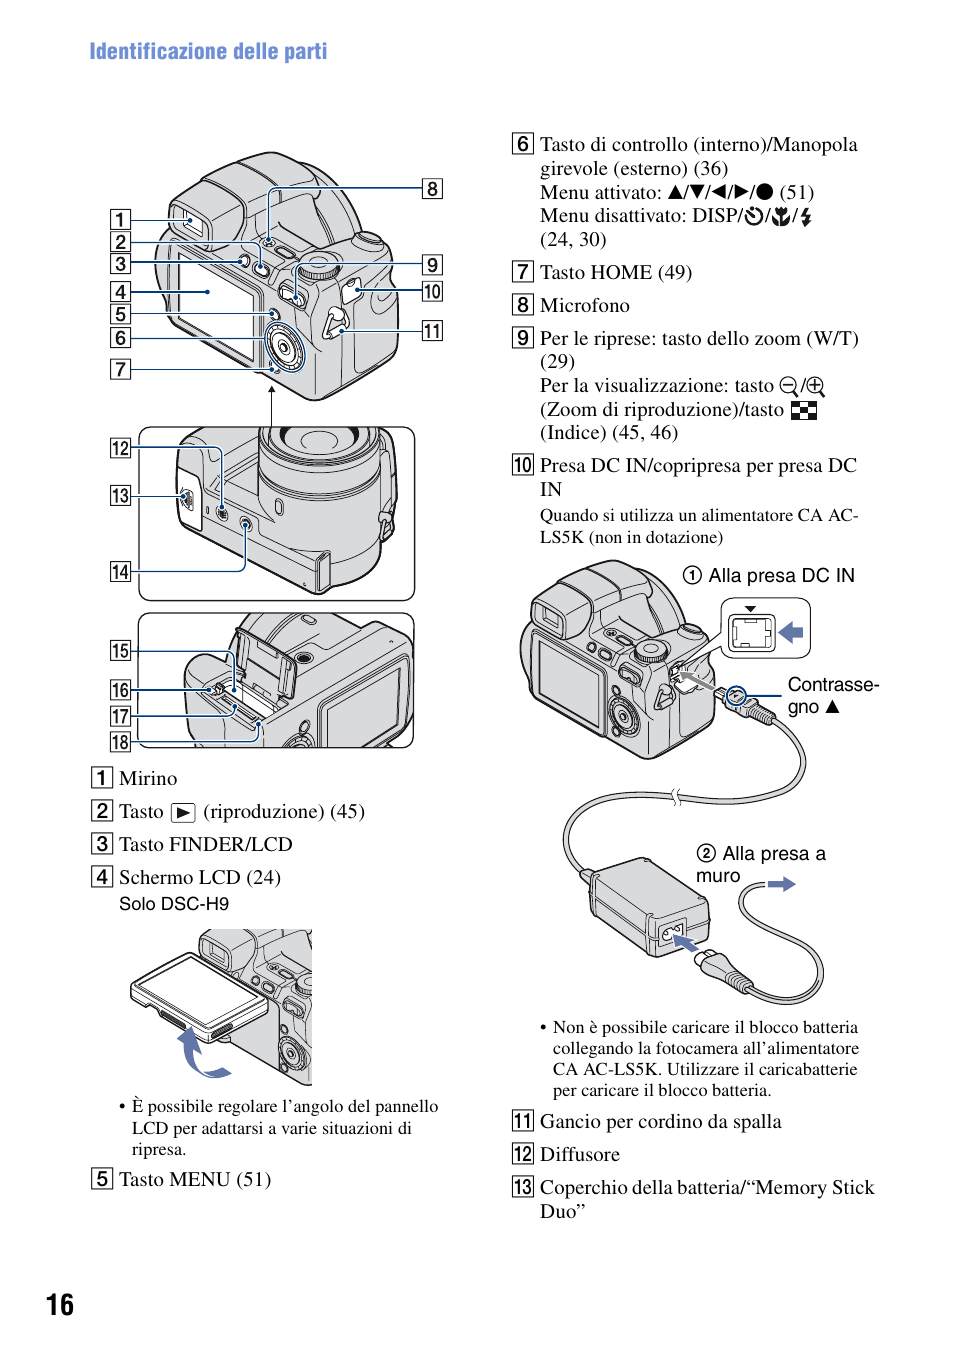 Sony DSC-H7 Manuale d'uso | Pagina 16 / 144